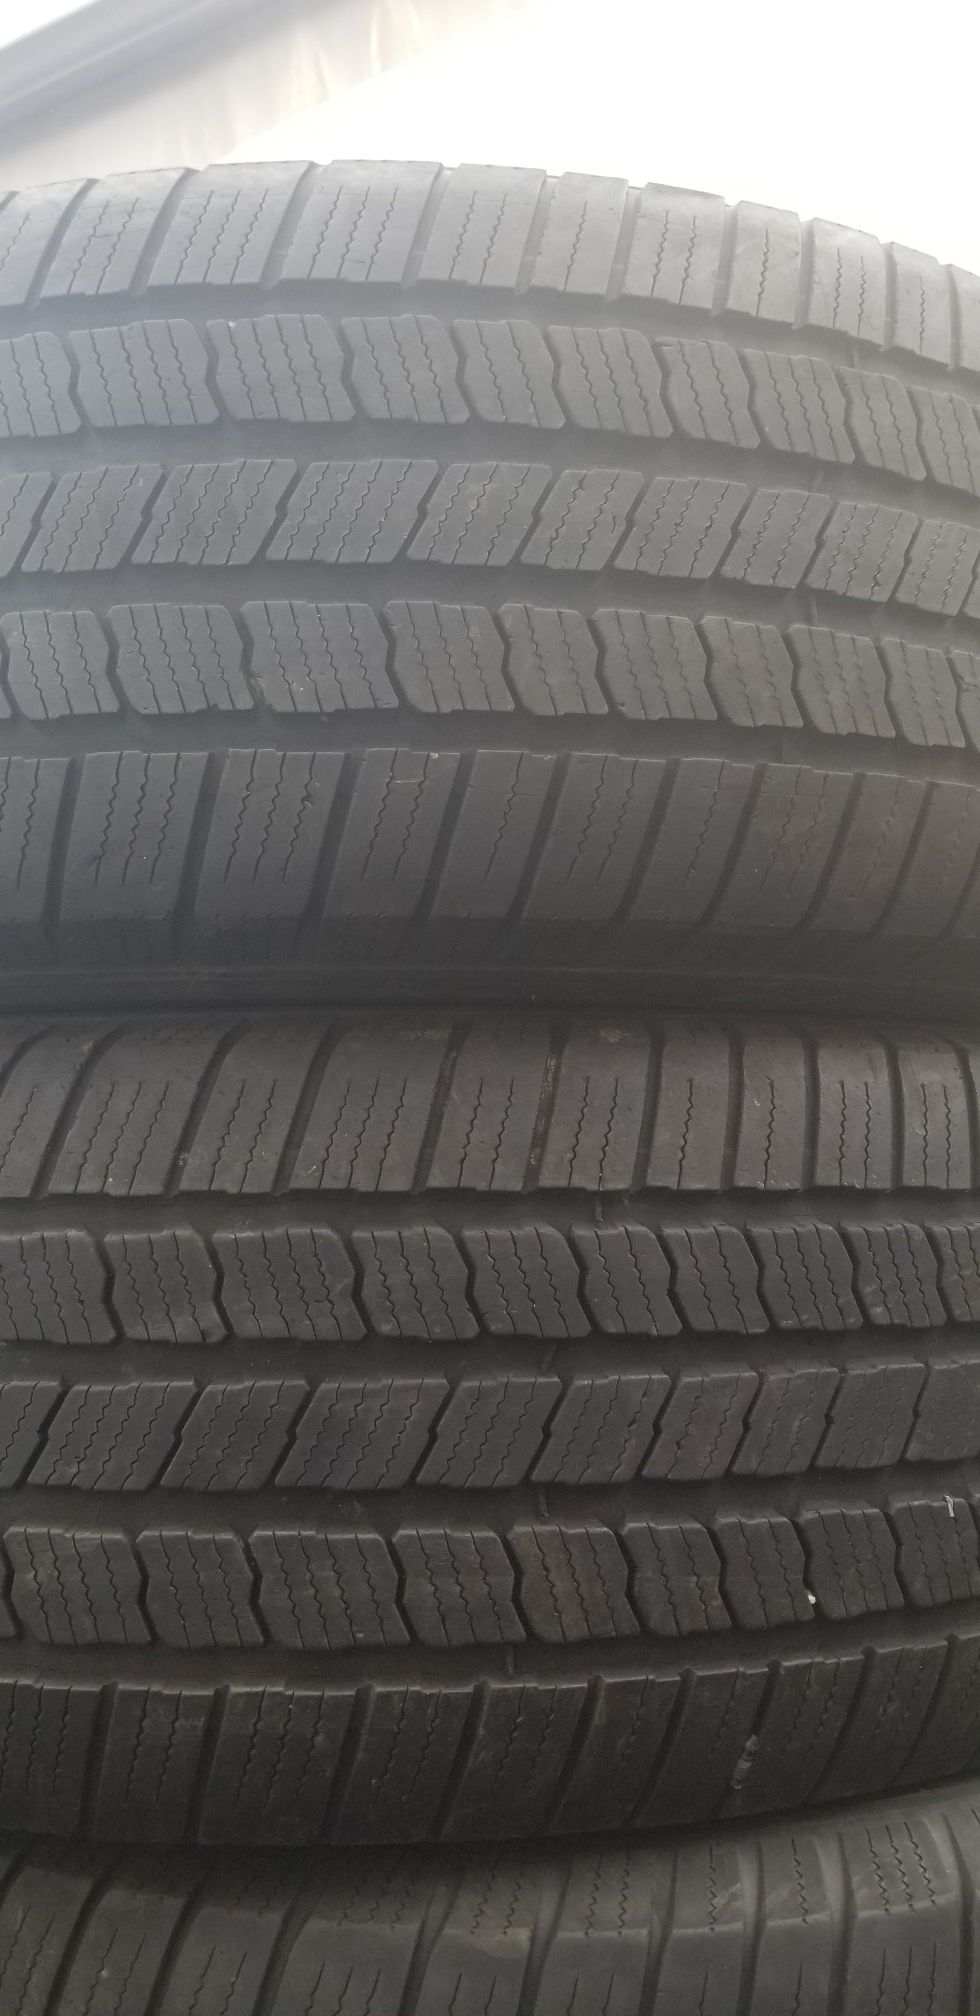 2 Michelin tires. 275 60 20